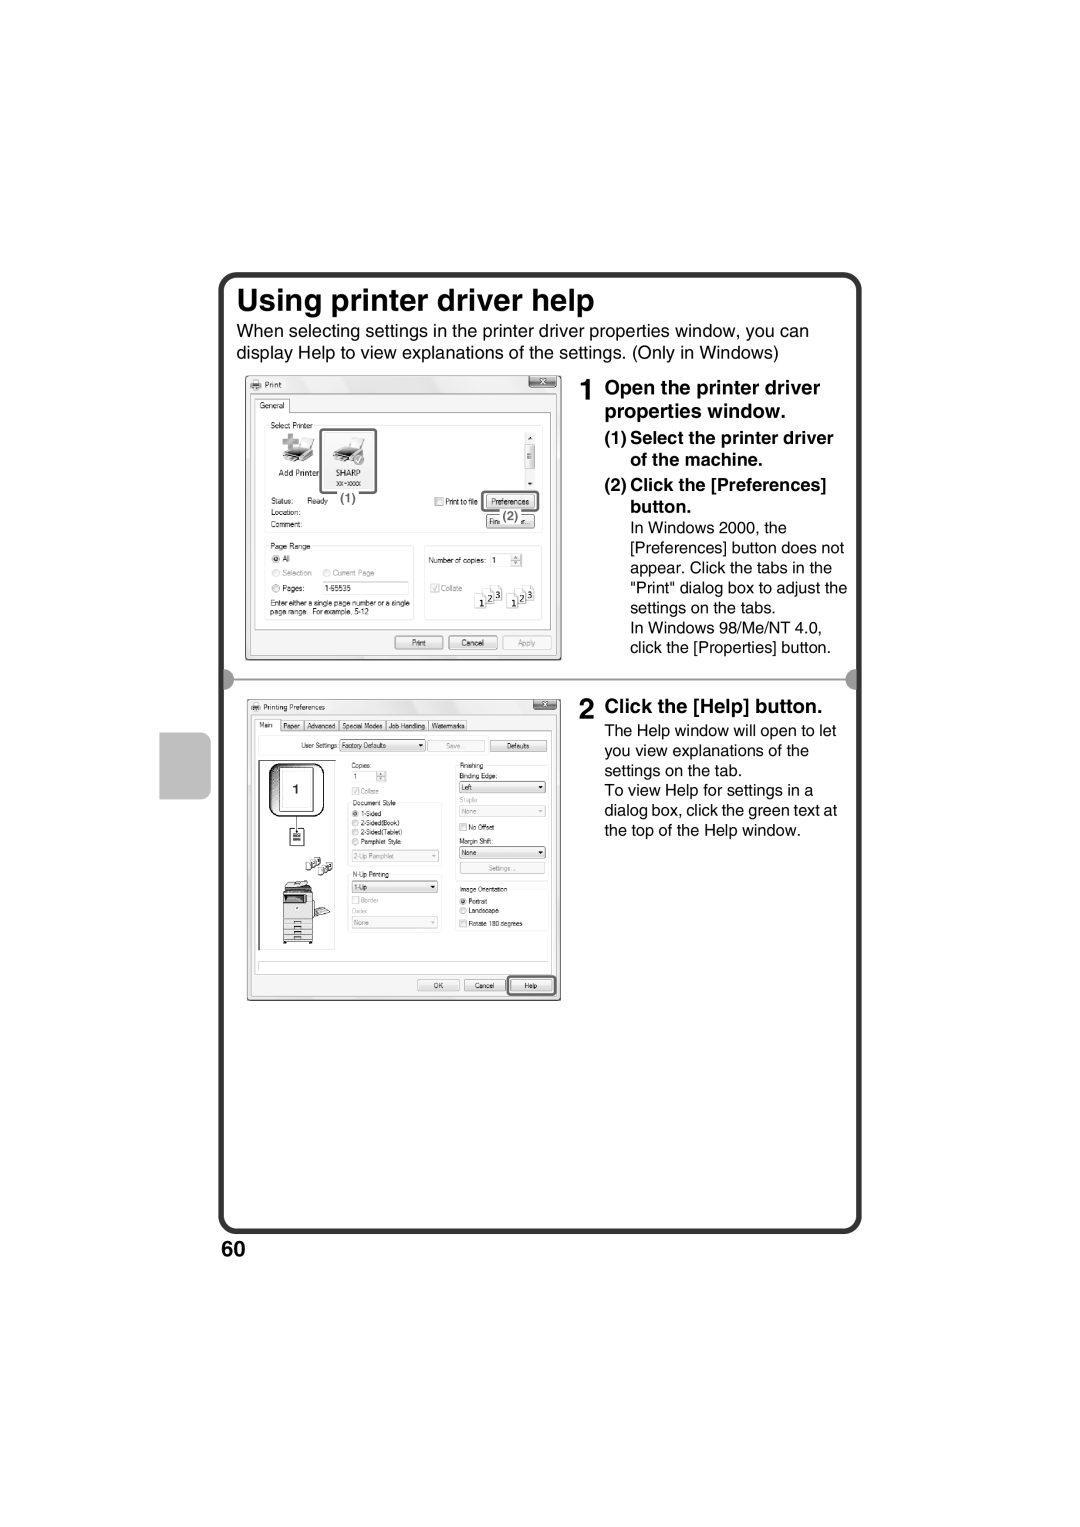 Sharp MX-B401, TINSE4377FCZZ Using printer driver help, Click the Help button, Open the printer driver properties window 